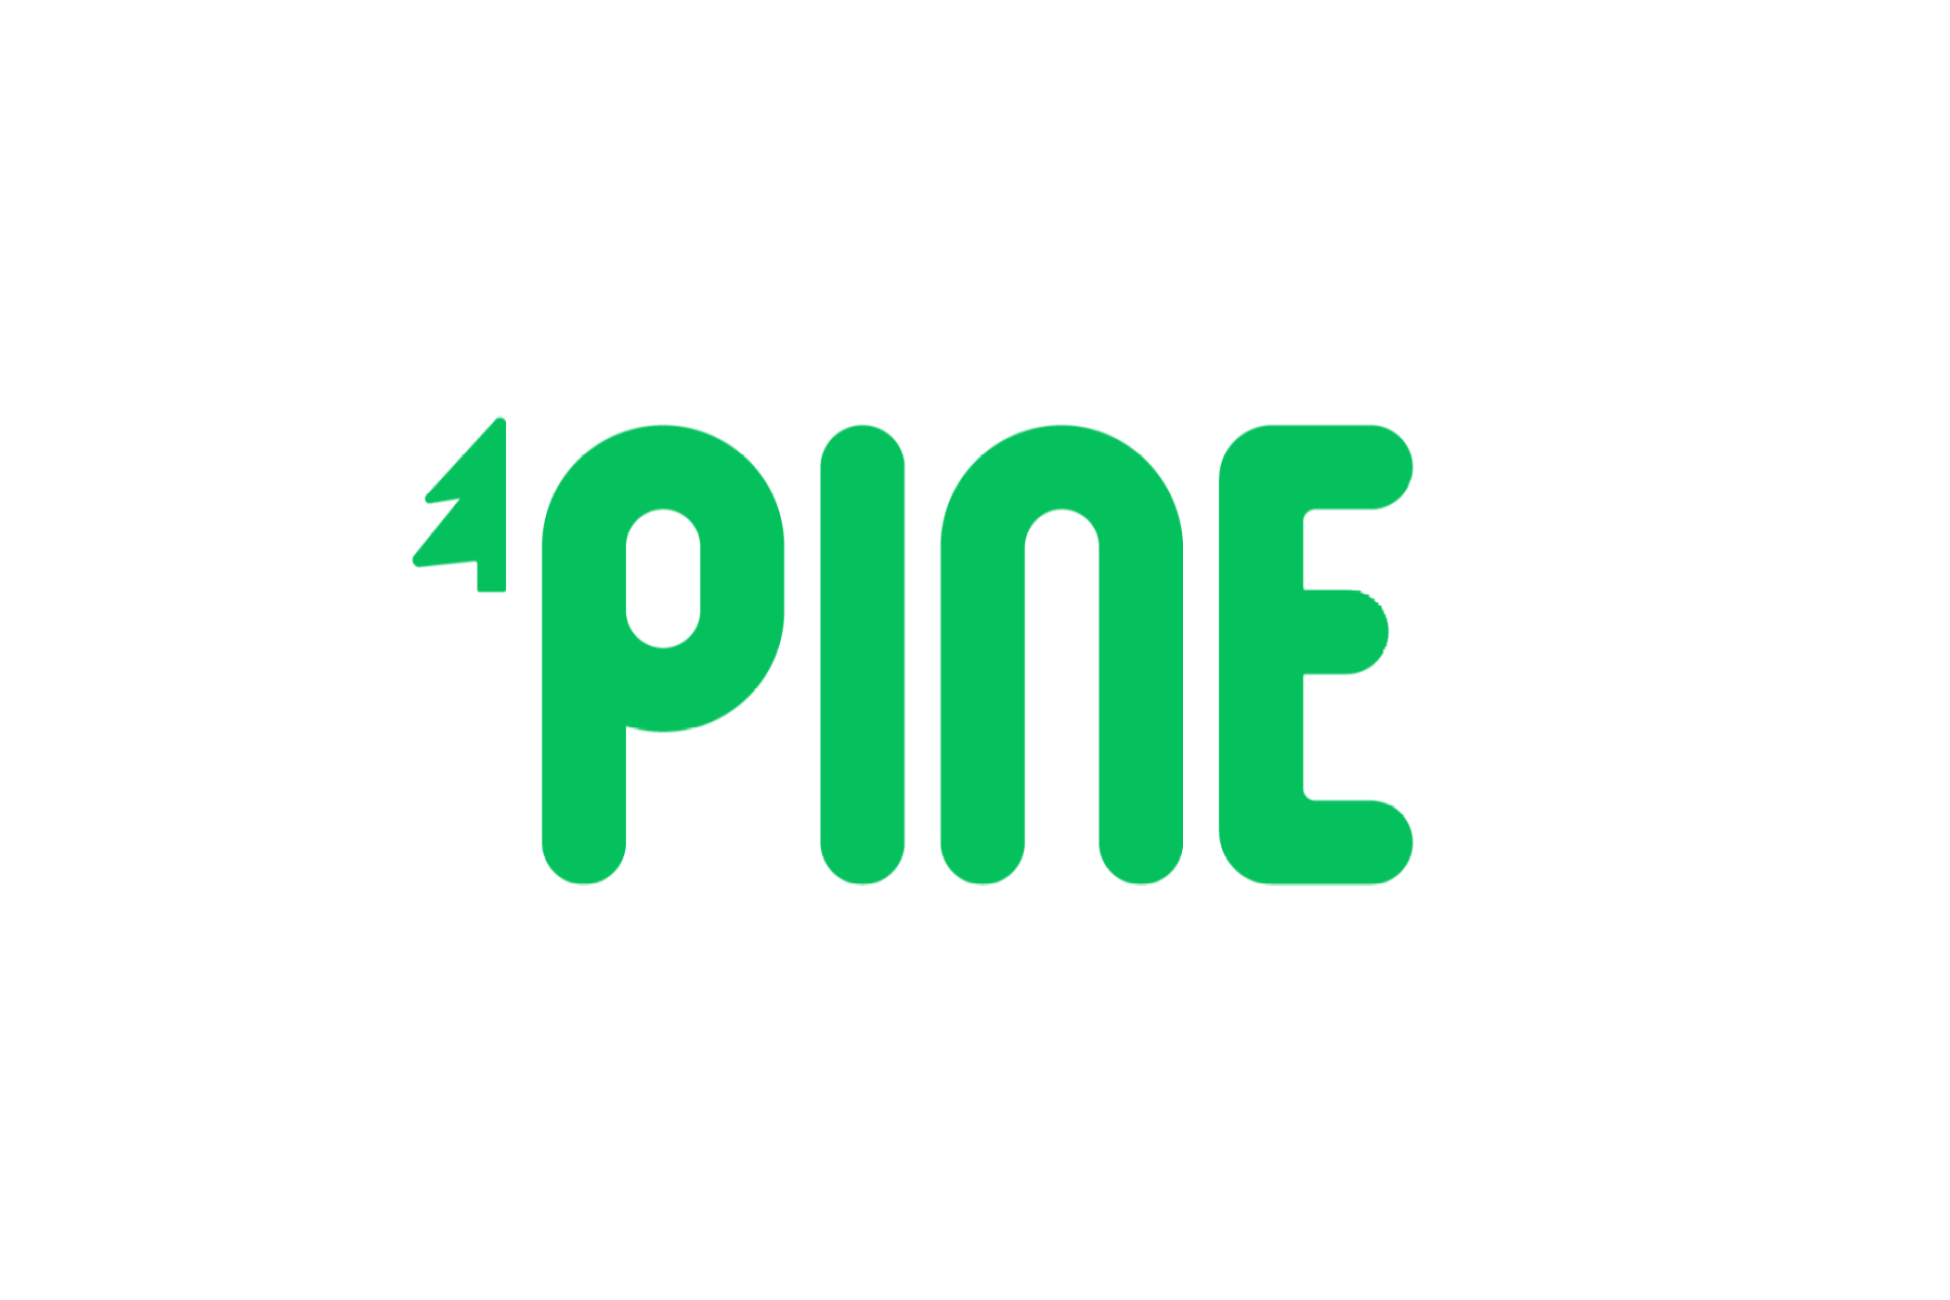 Pine Games